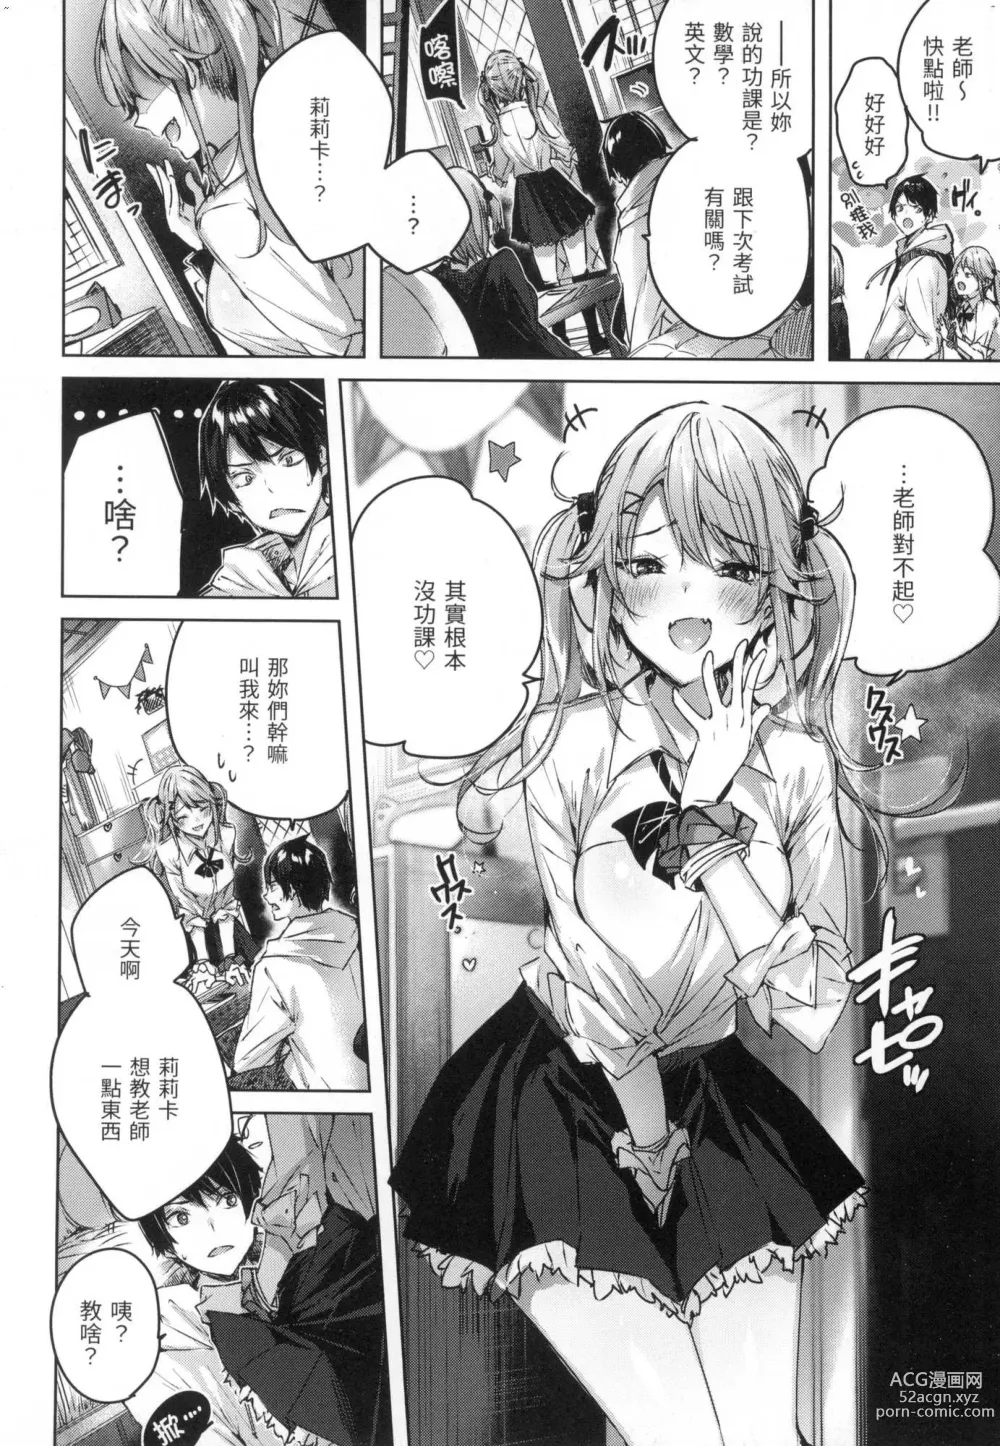 Page 159 of manga 揮灑熱浪♥️ (decensored)